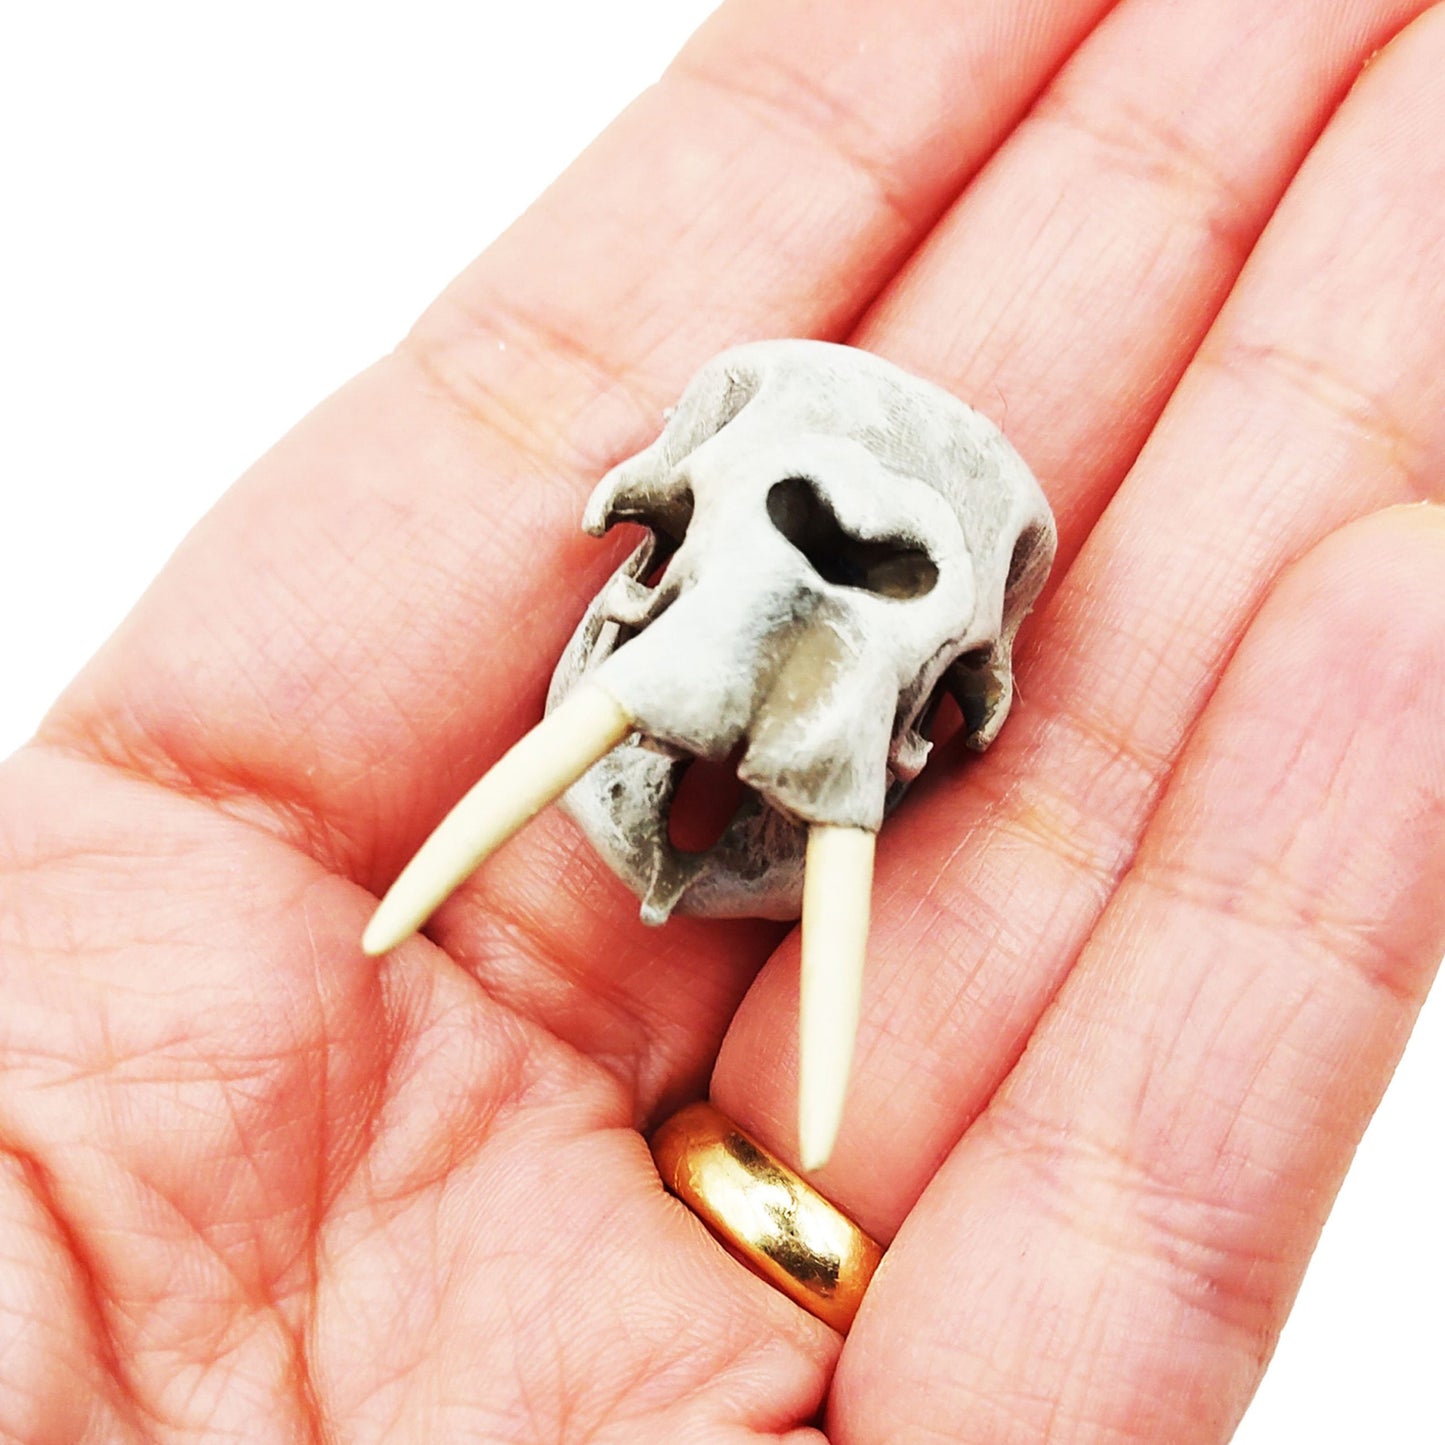 African Elephant Skull - 1:24 Scale skull replica for diorama, dollhouse, curio cabinet, miniature animal skulls (1 skull)